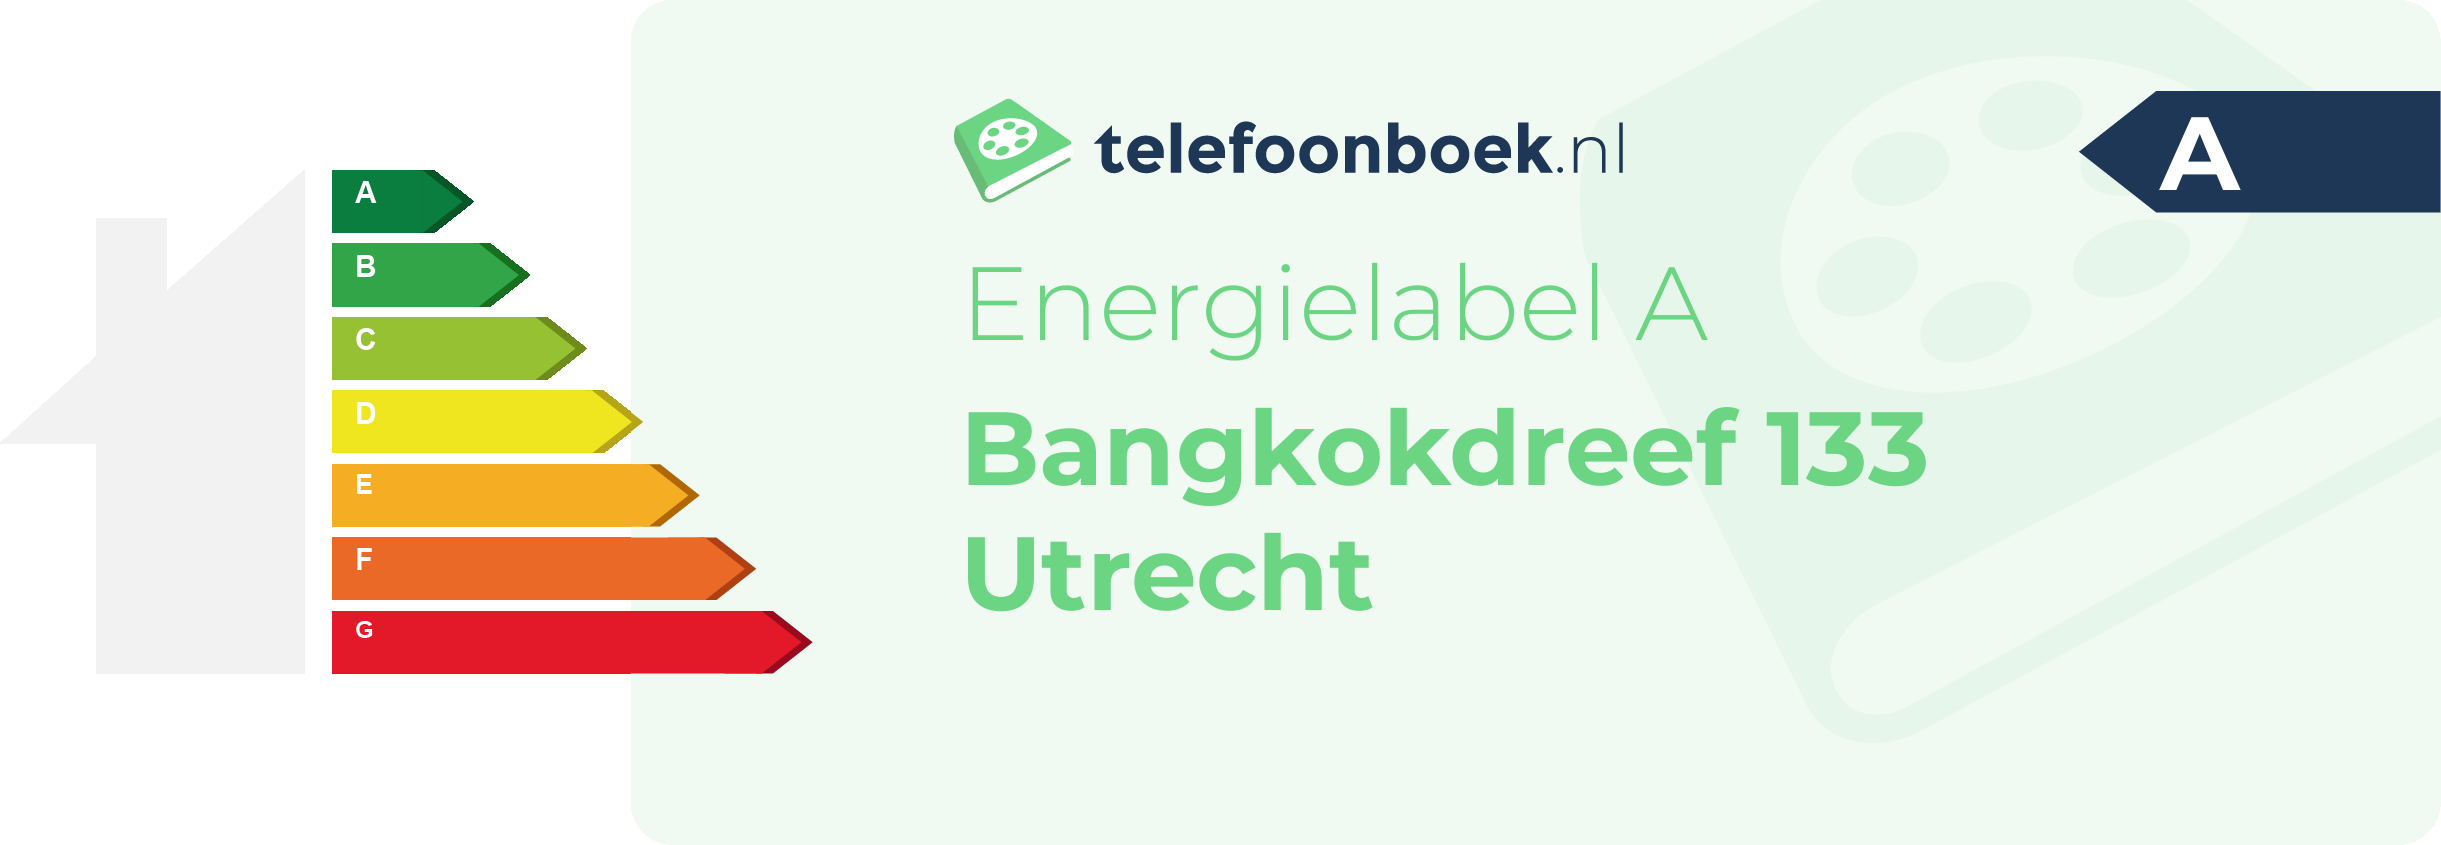 Energielabel Bangkokdreef 133 Utrecht